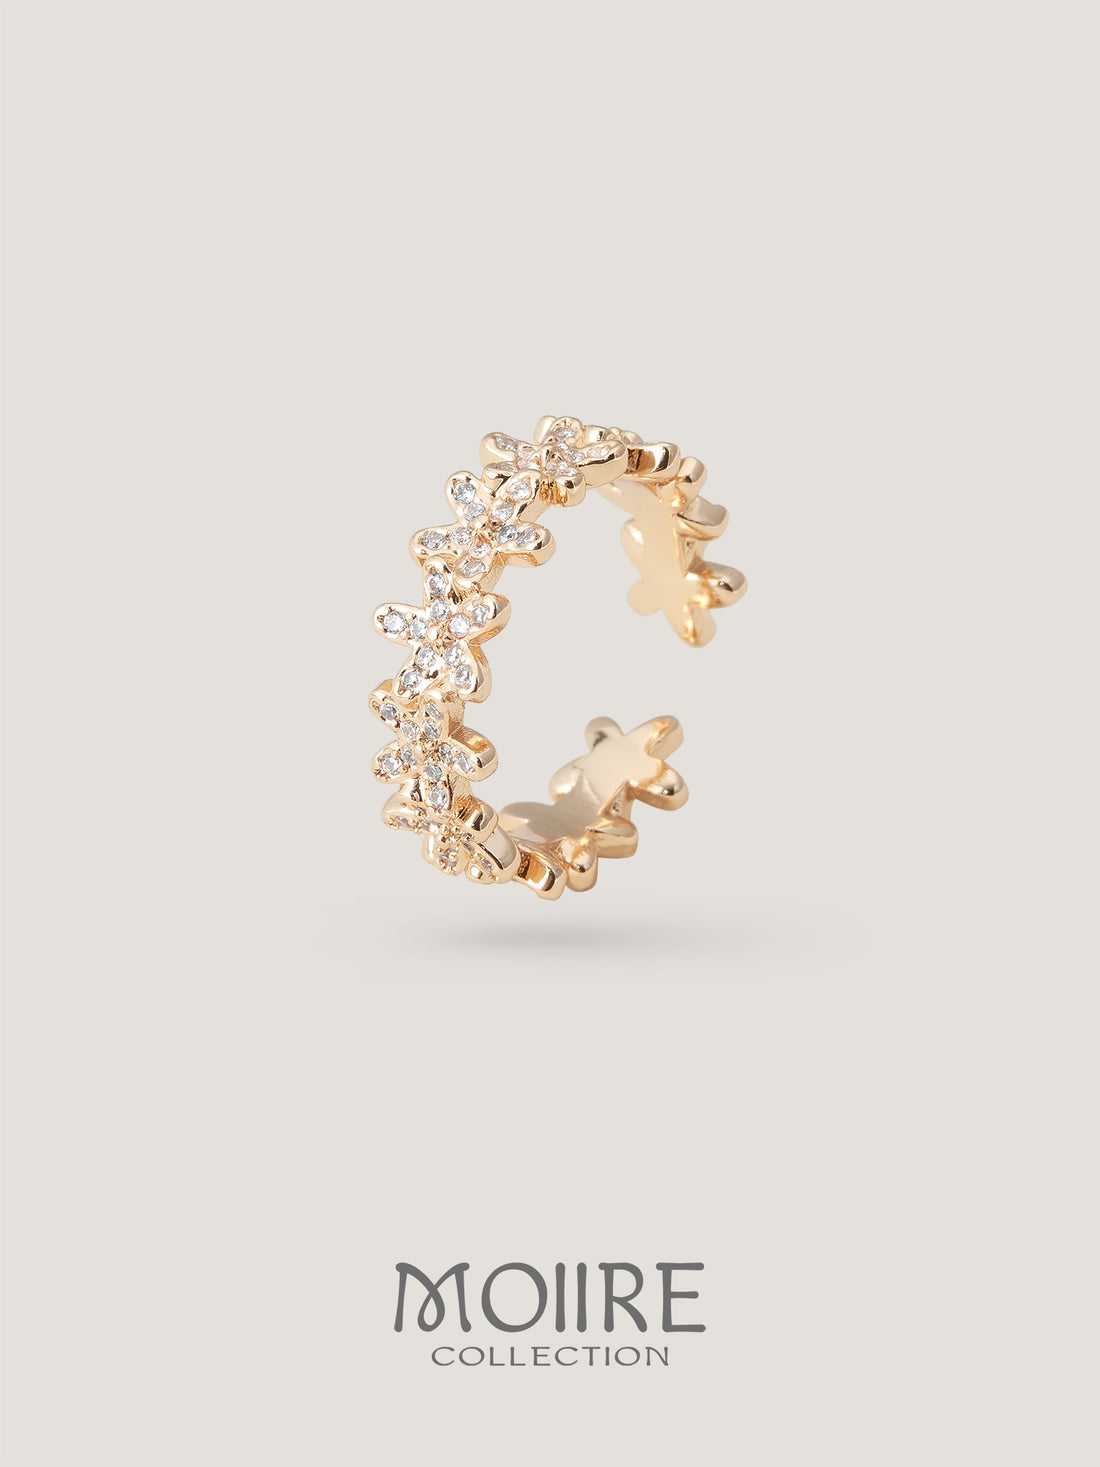 Moiire Jewelry | 自己的繁花